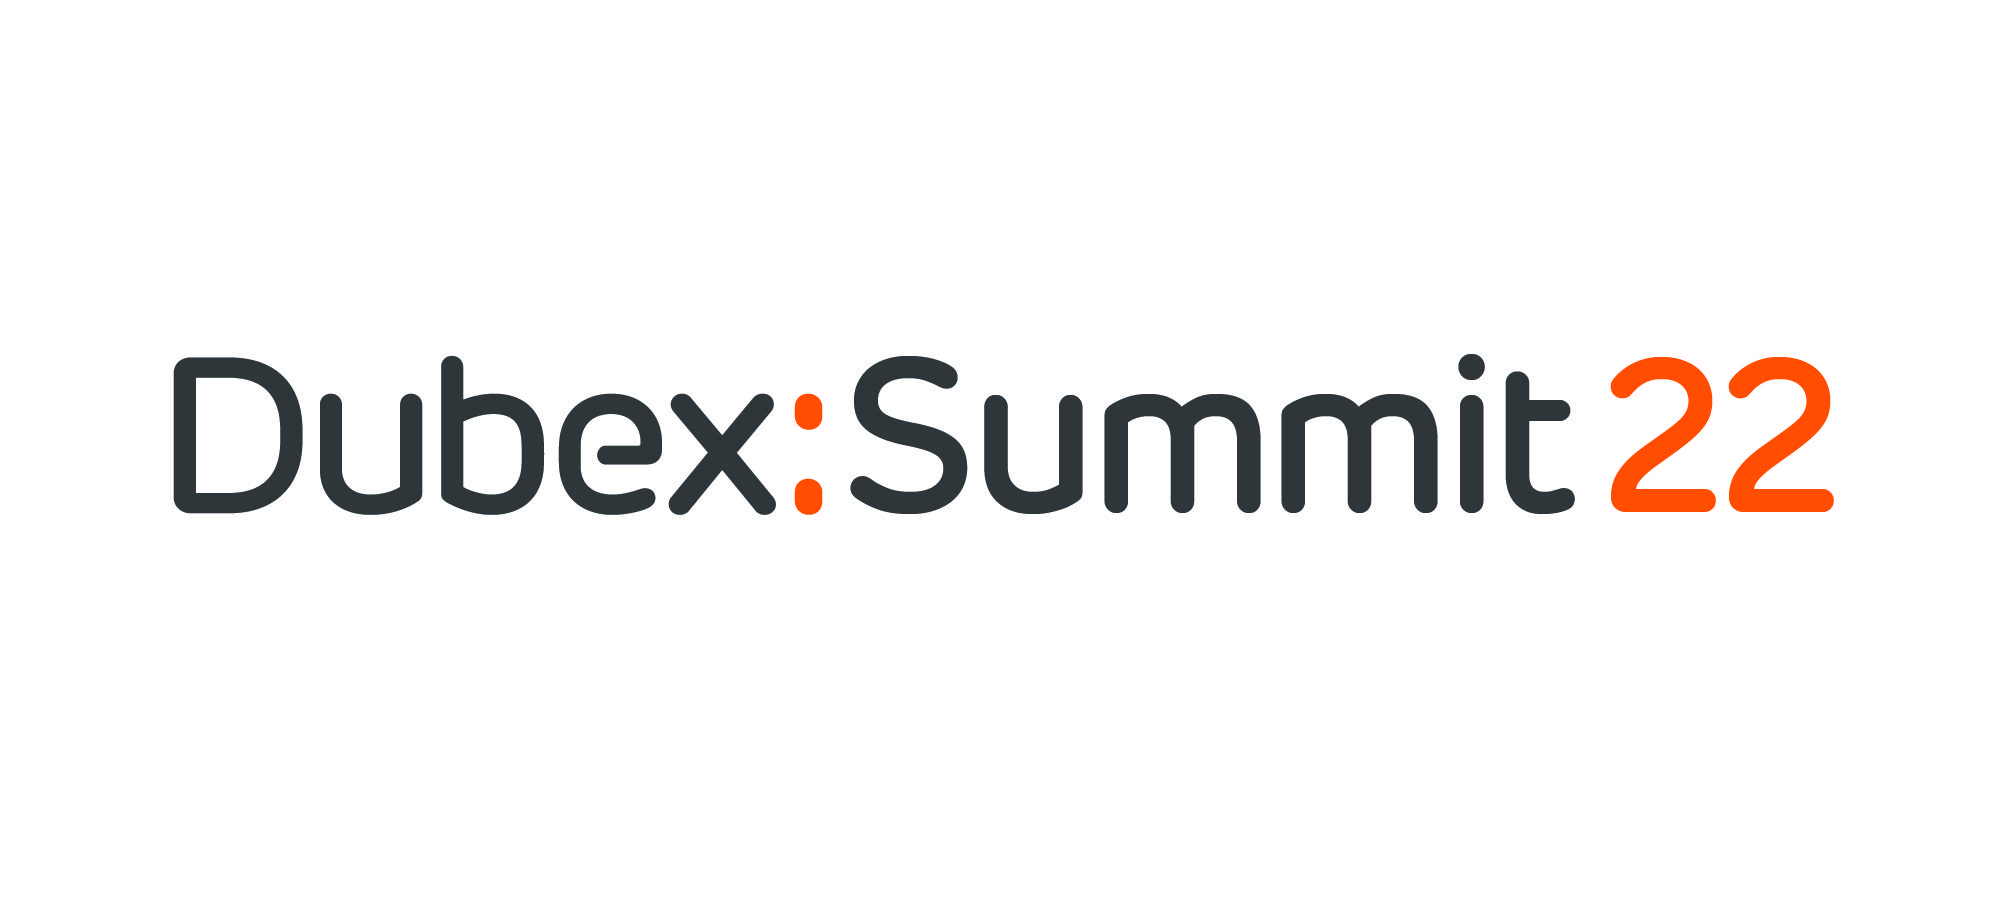 Dubex Summit 2022 logo